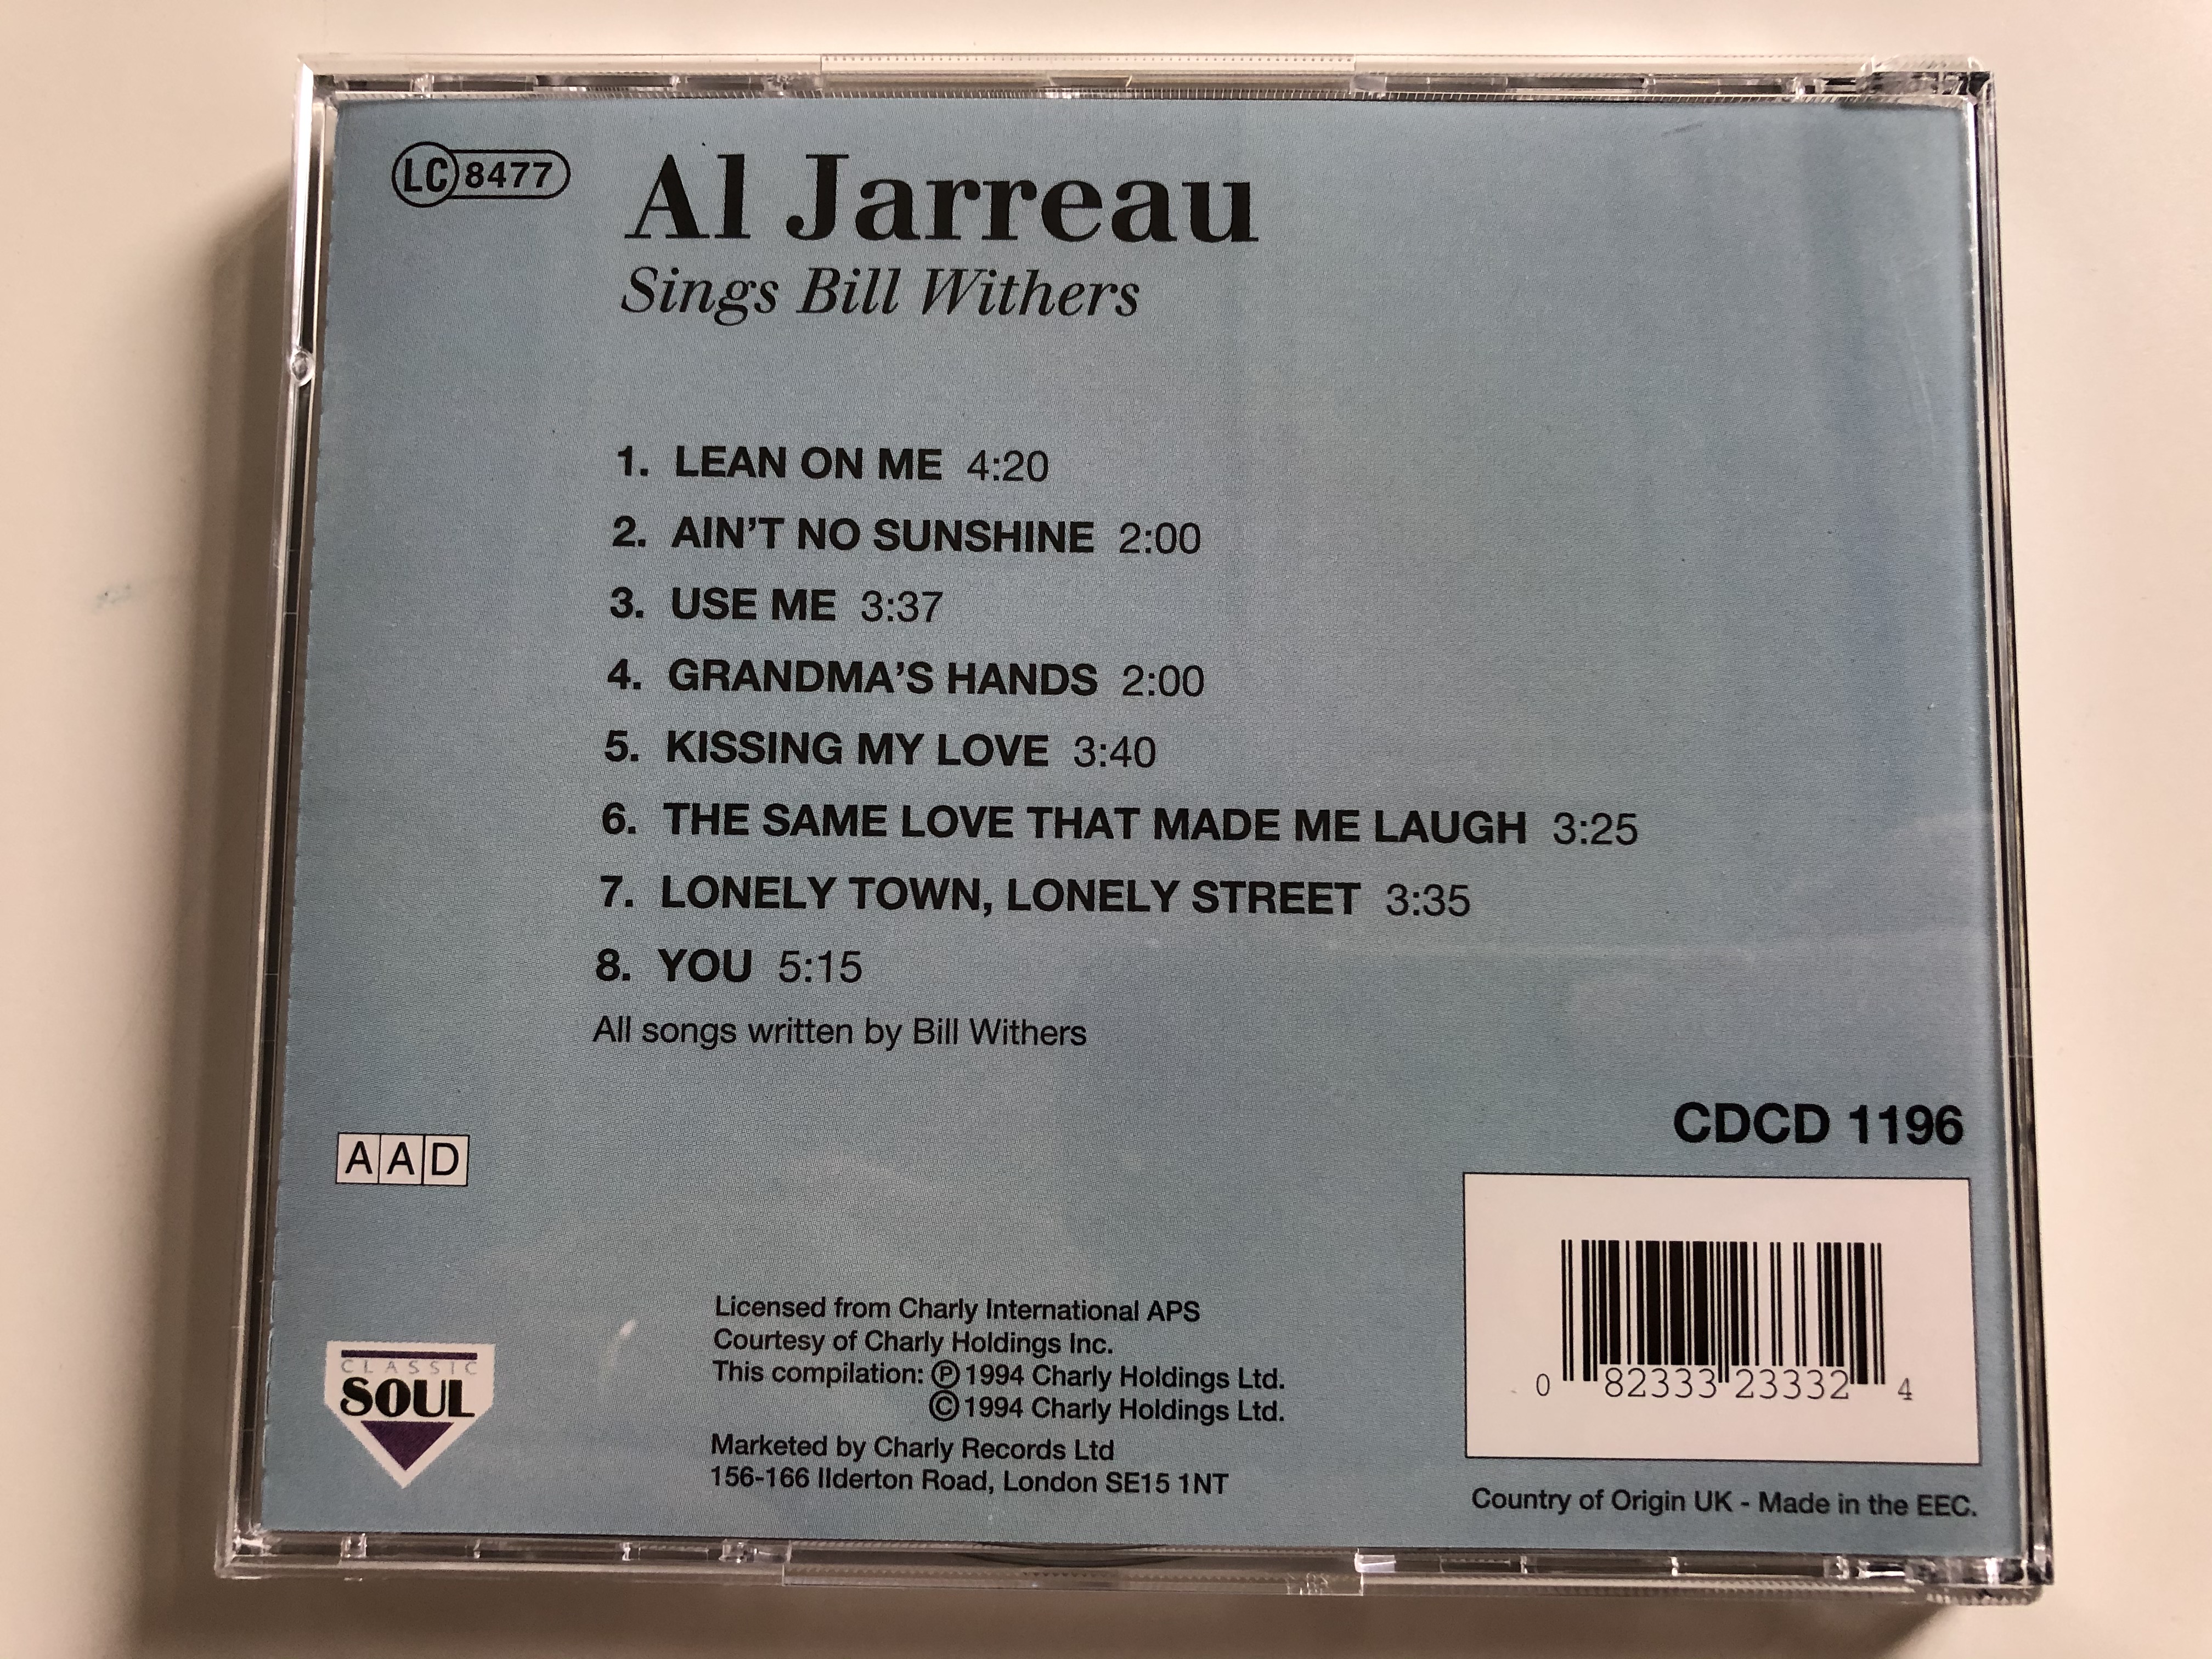 al-jarreau-sings-bill-withers-charly-holdings-ltd.-audio-cd-1994-cdcd-1196-4-.jpg